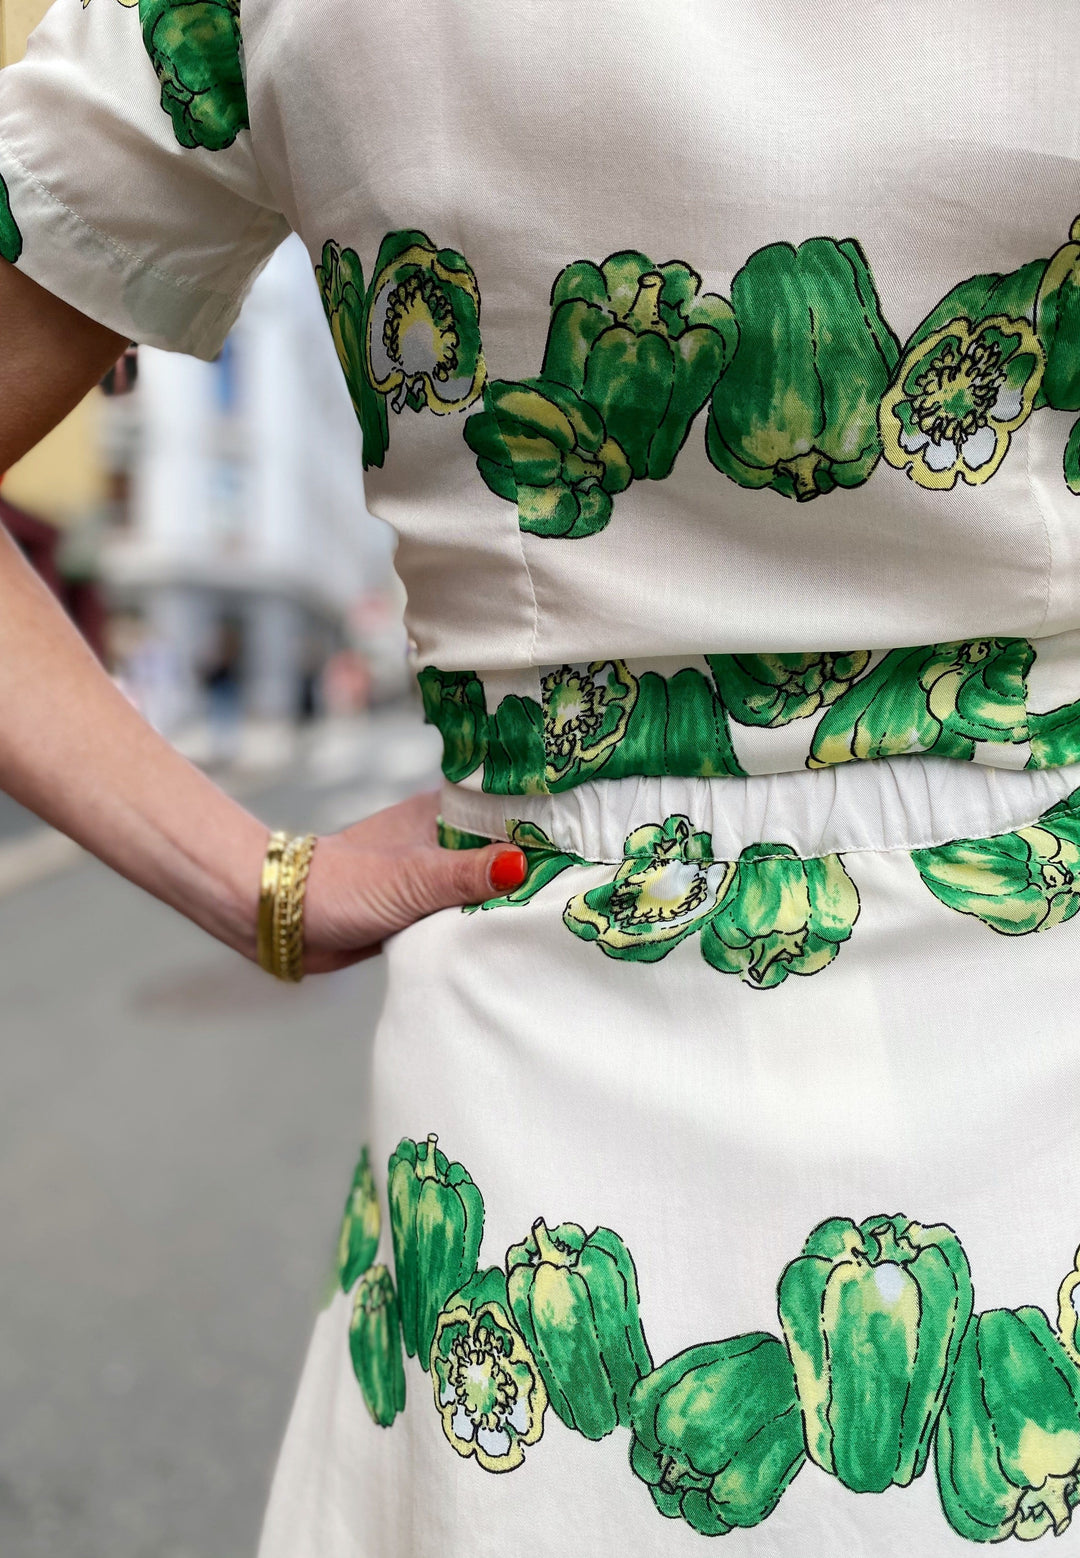 Dianas Vintage skjørt Betty Button skirt - green pepper